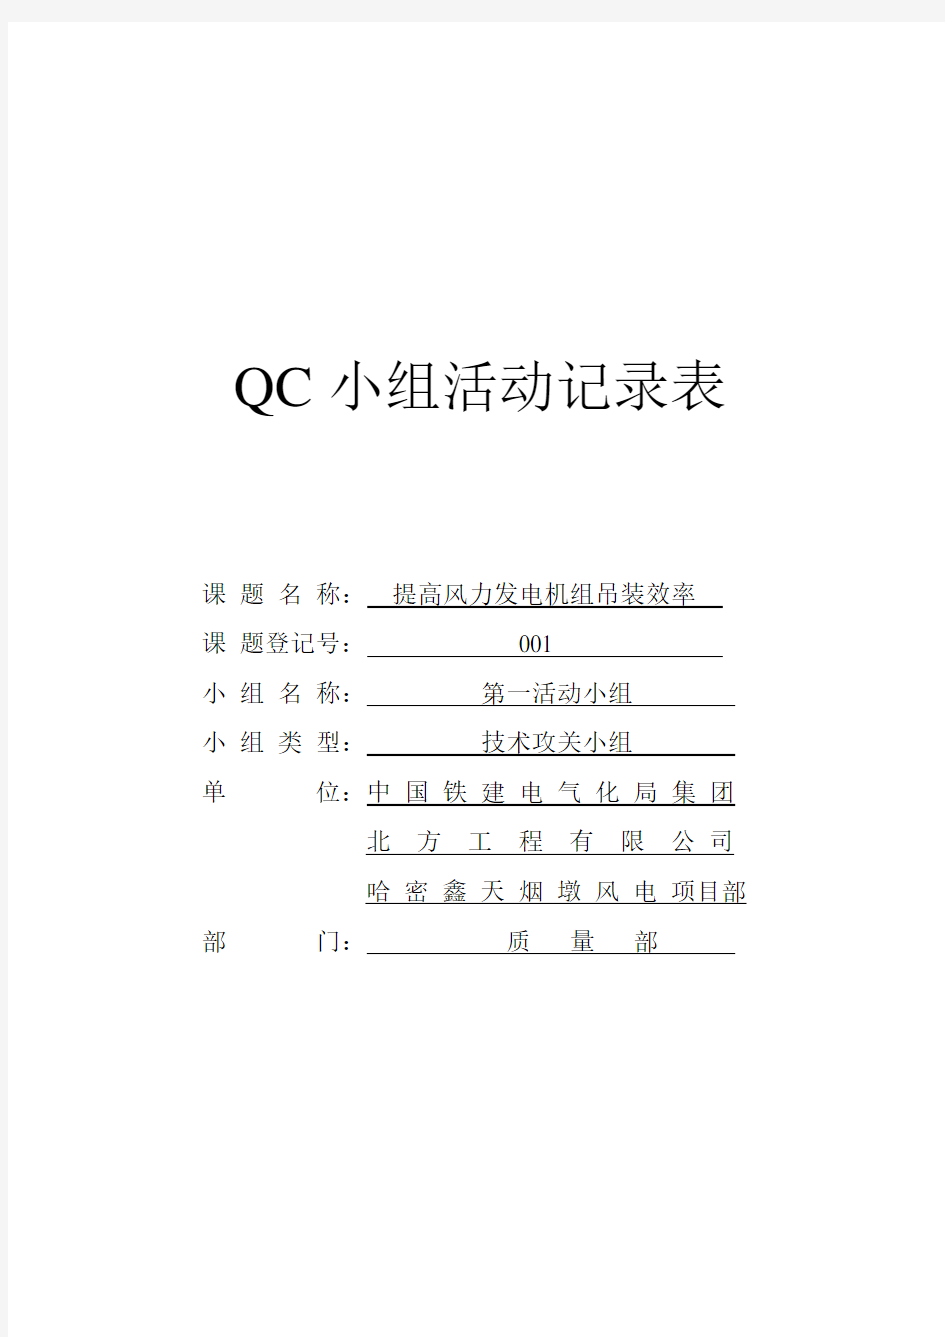 QC小组活动记录表(超欠挖模版